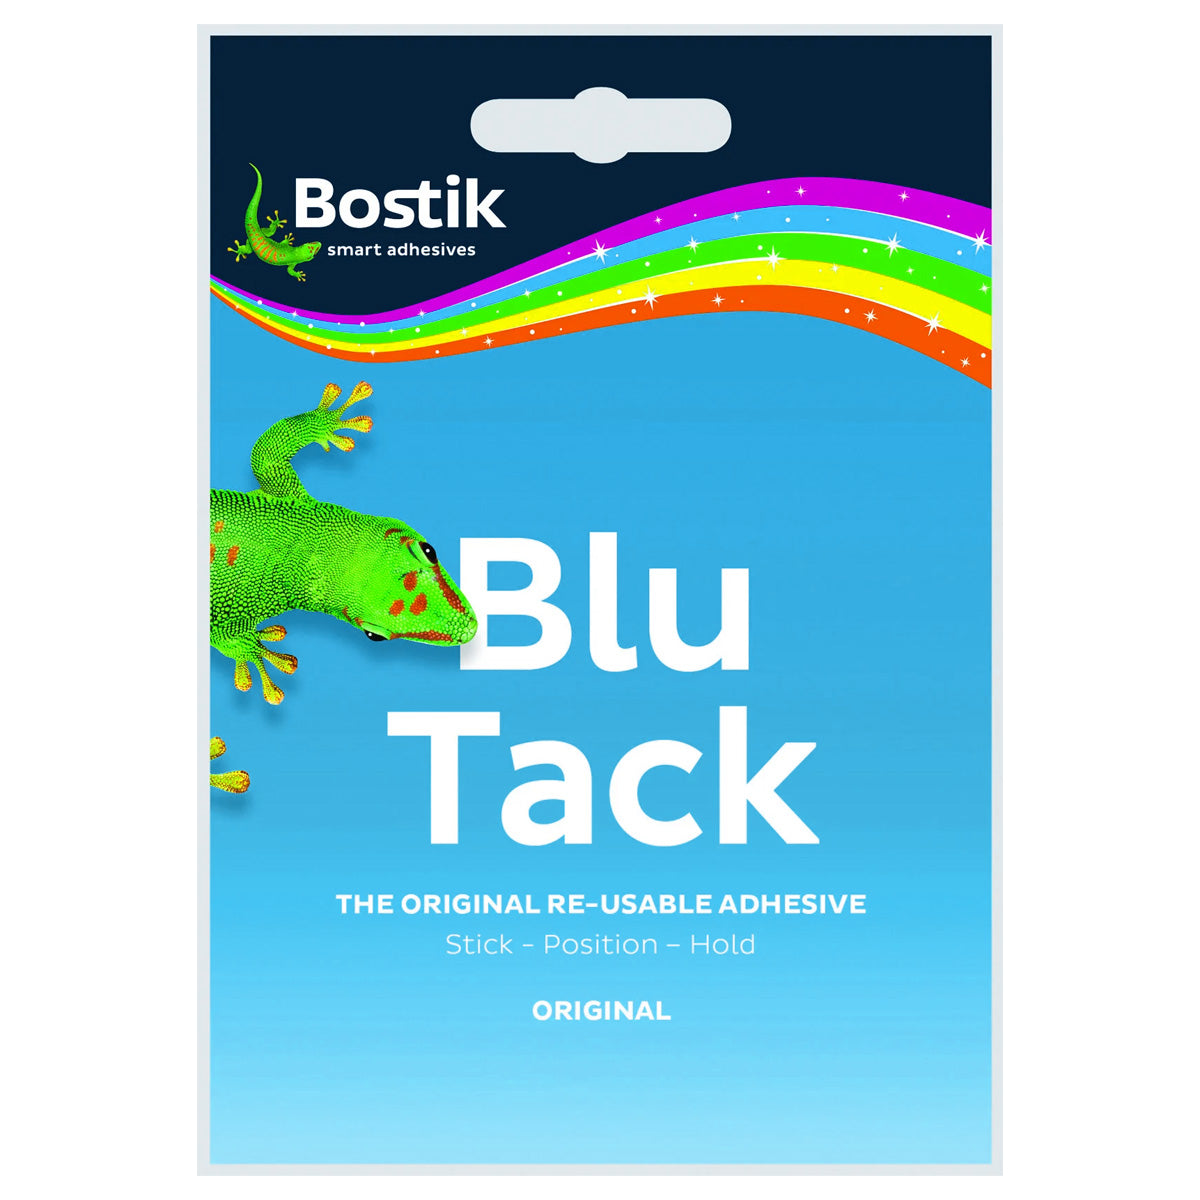 Bostik - Blu Tack - Continental Food Store